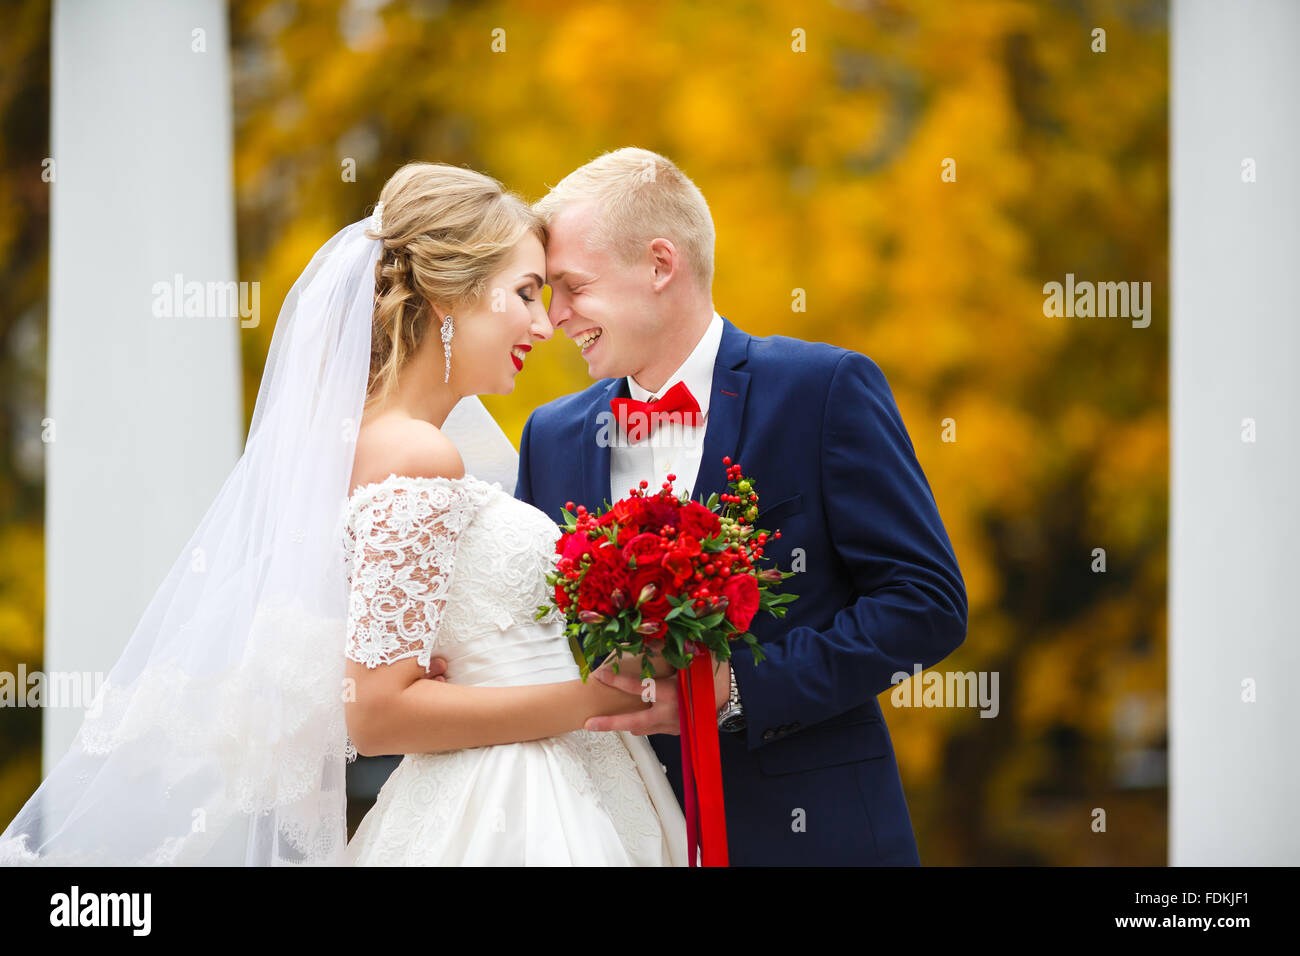 Wedding couple smiling on the autumn background Stock Photo